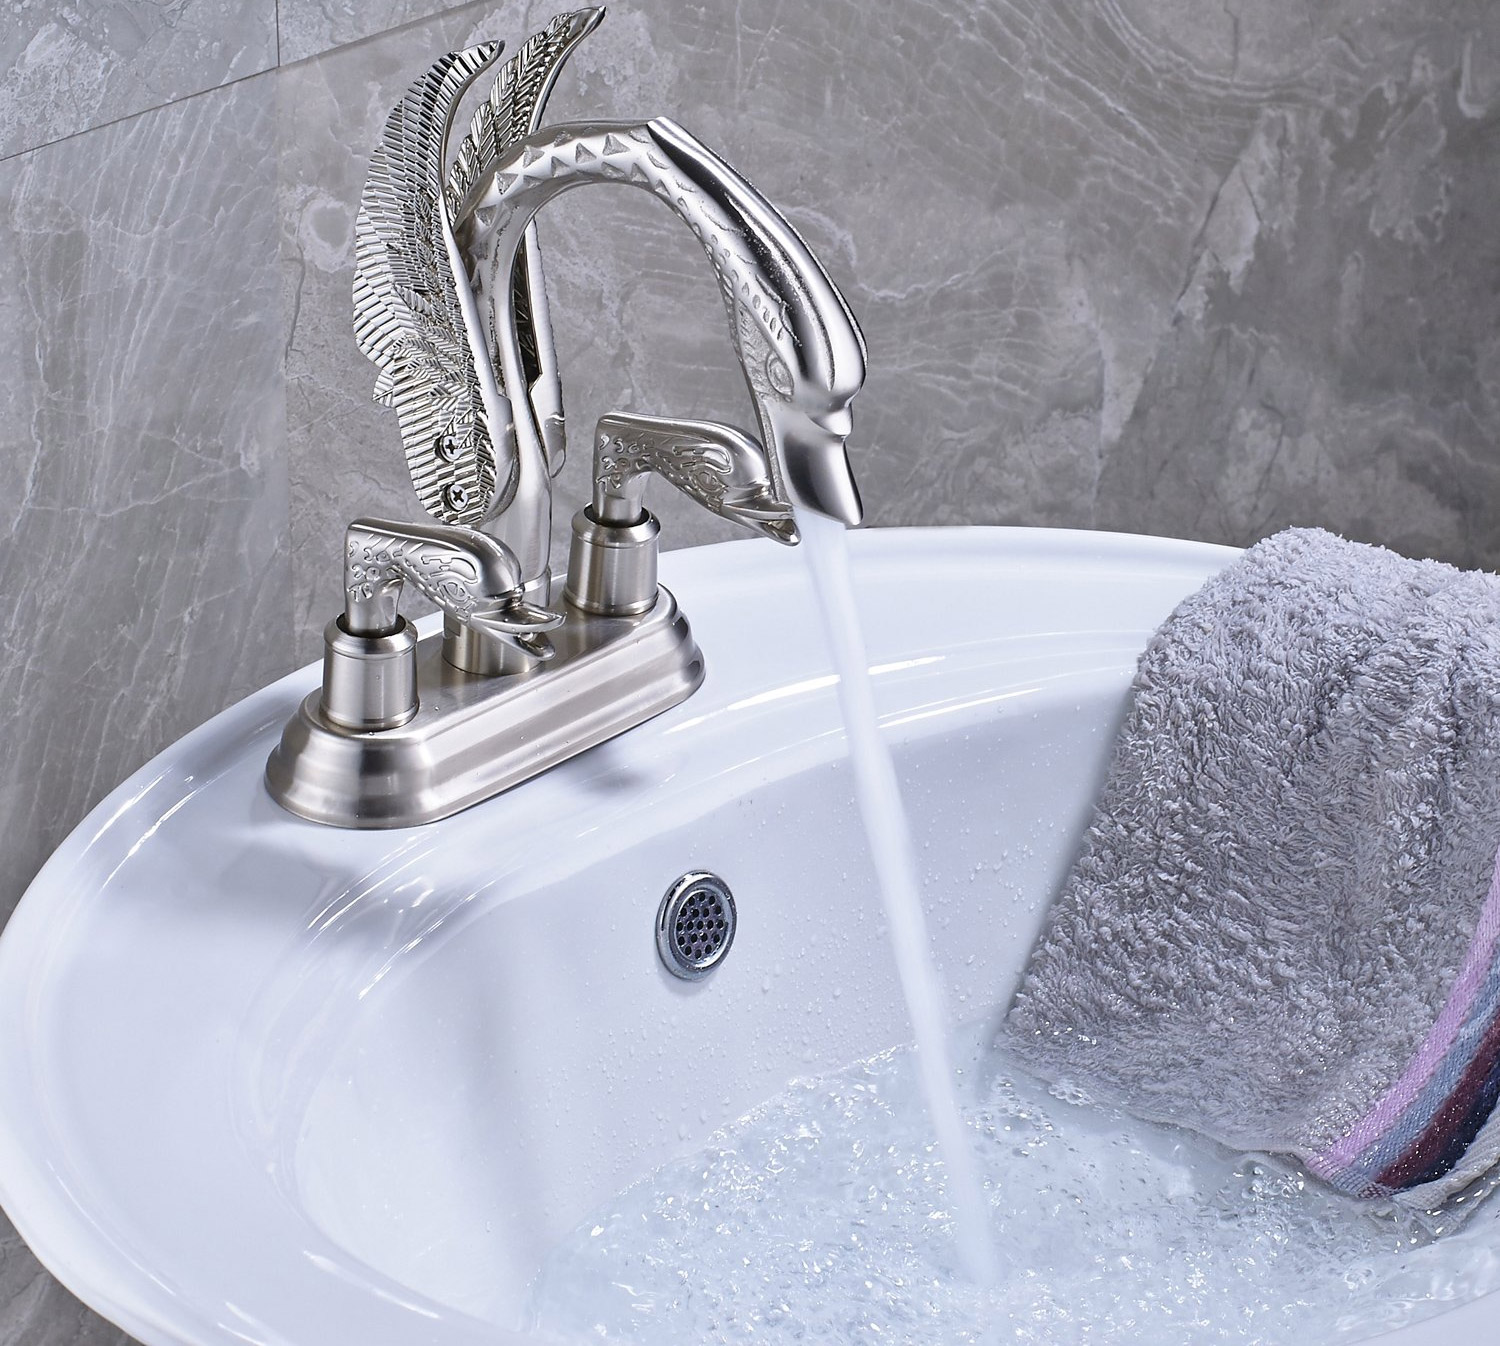 Luxurious Swan Faucet - Silver Wings bird faucet